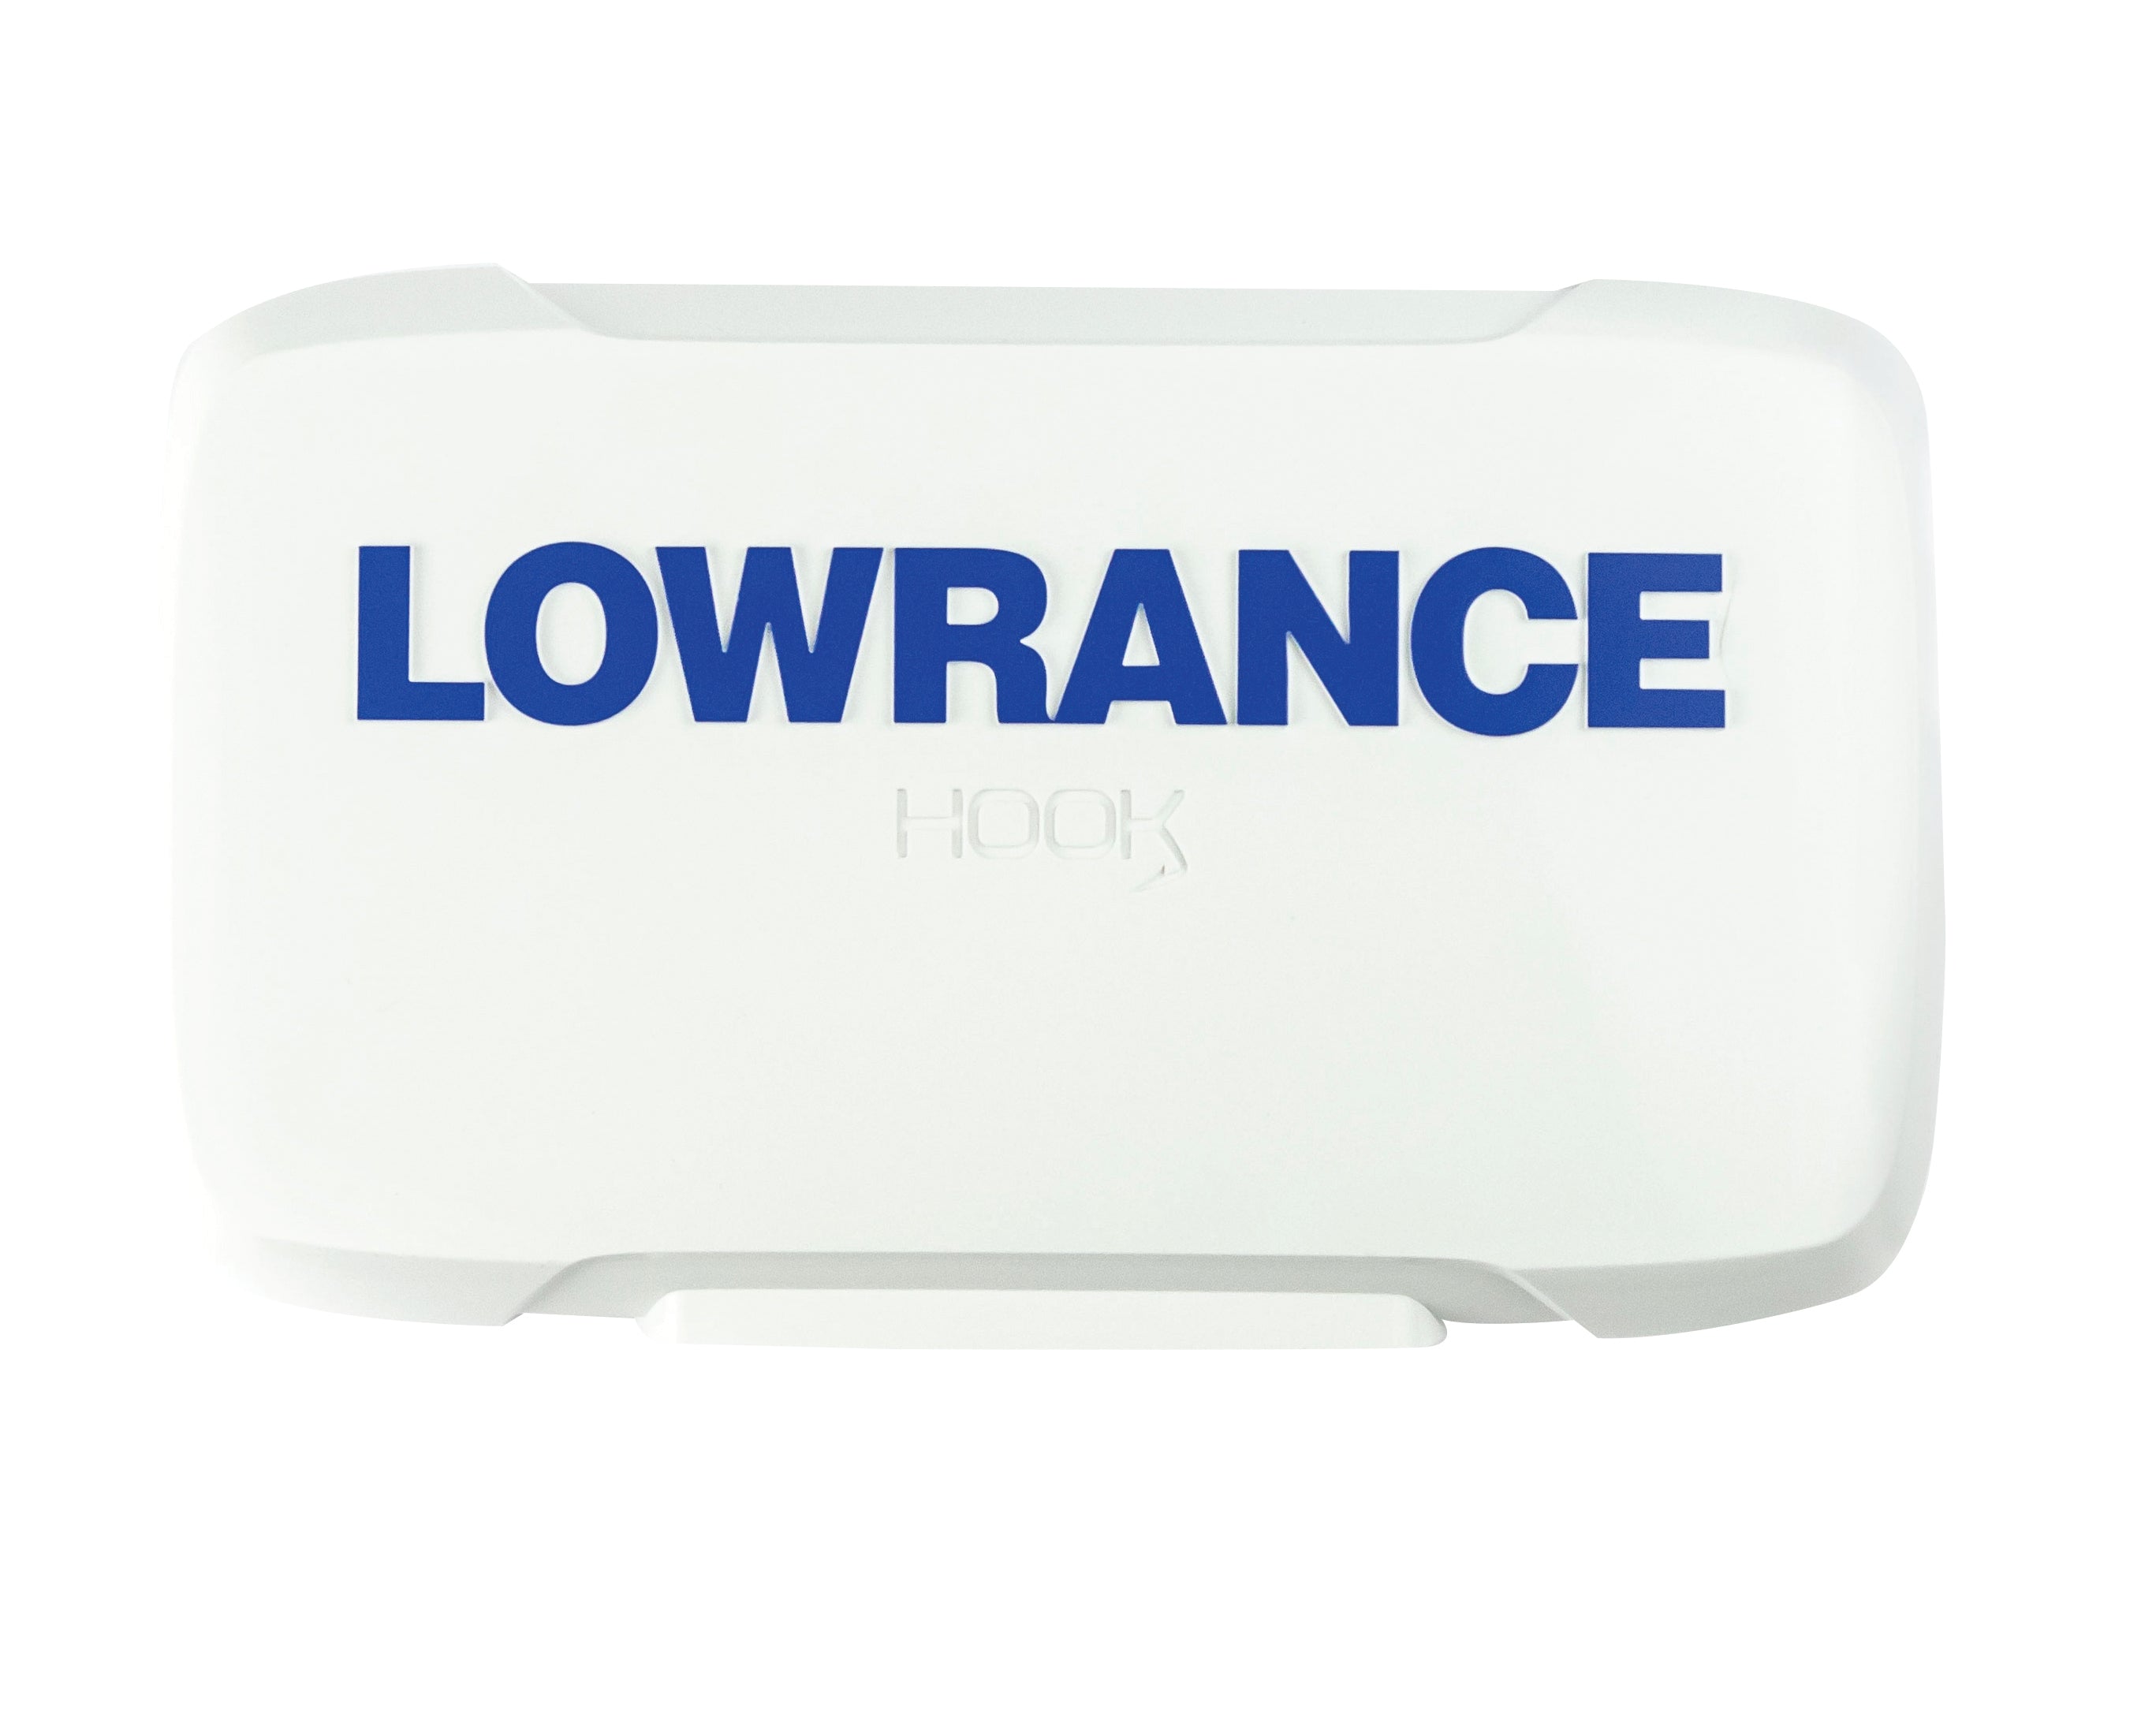 Lowrance 000-14173-001 HOOK2 Sun Cover - 4"